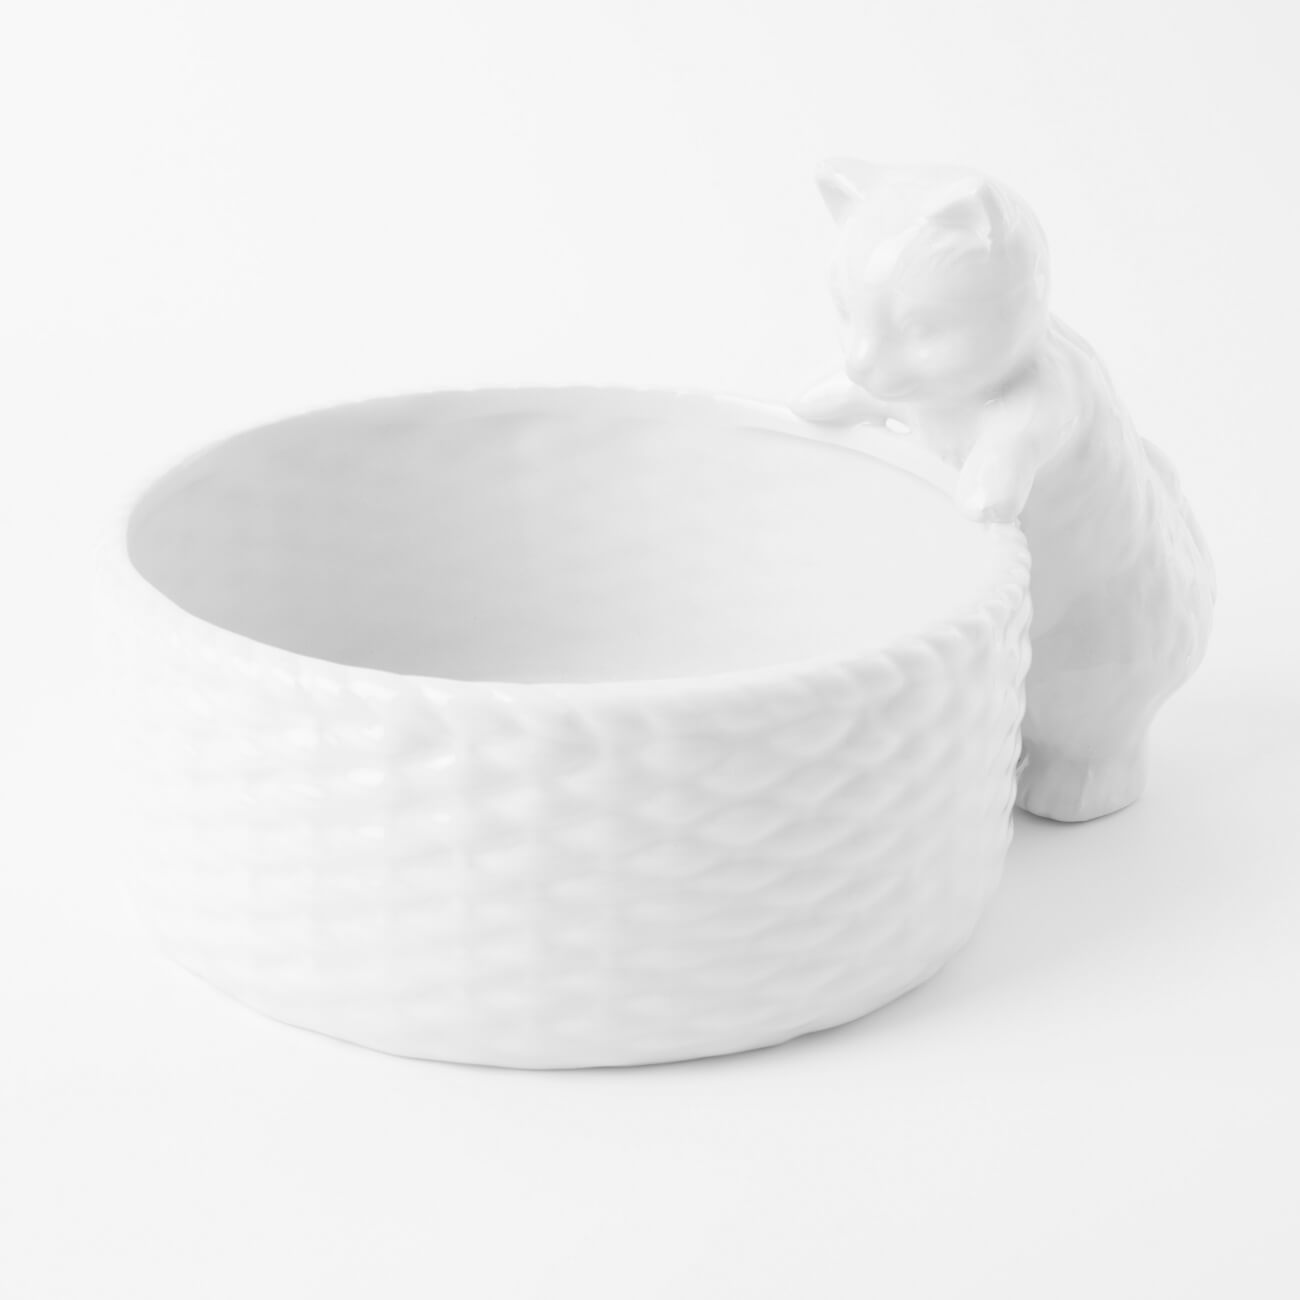 Конфетница, 23х13 см, керамика, белая, Кот с корзиной, Kitten конфетница сапожок с бомбошками